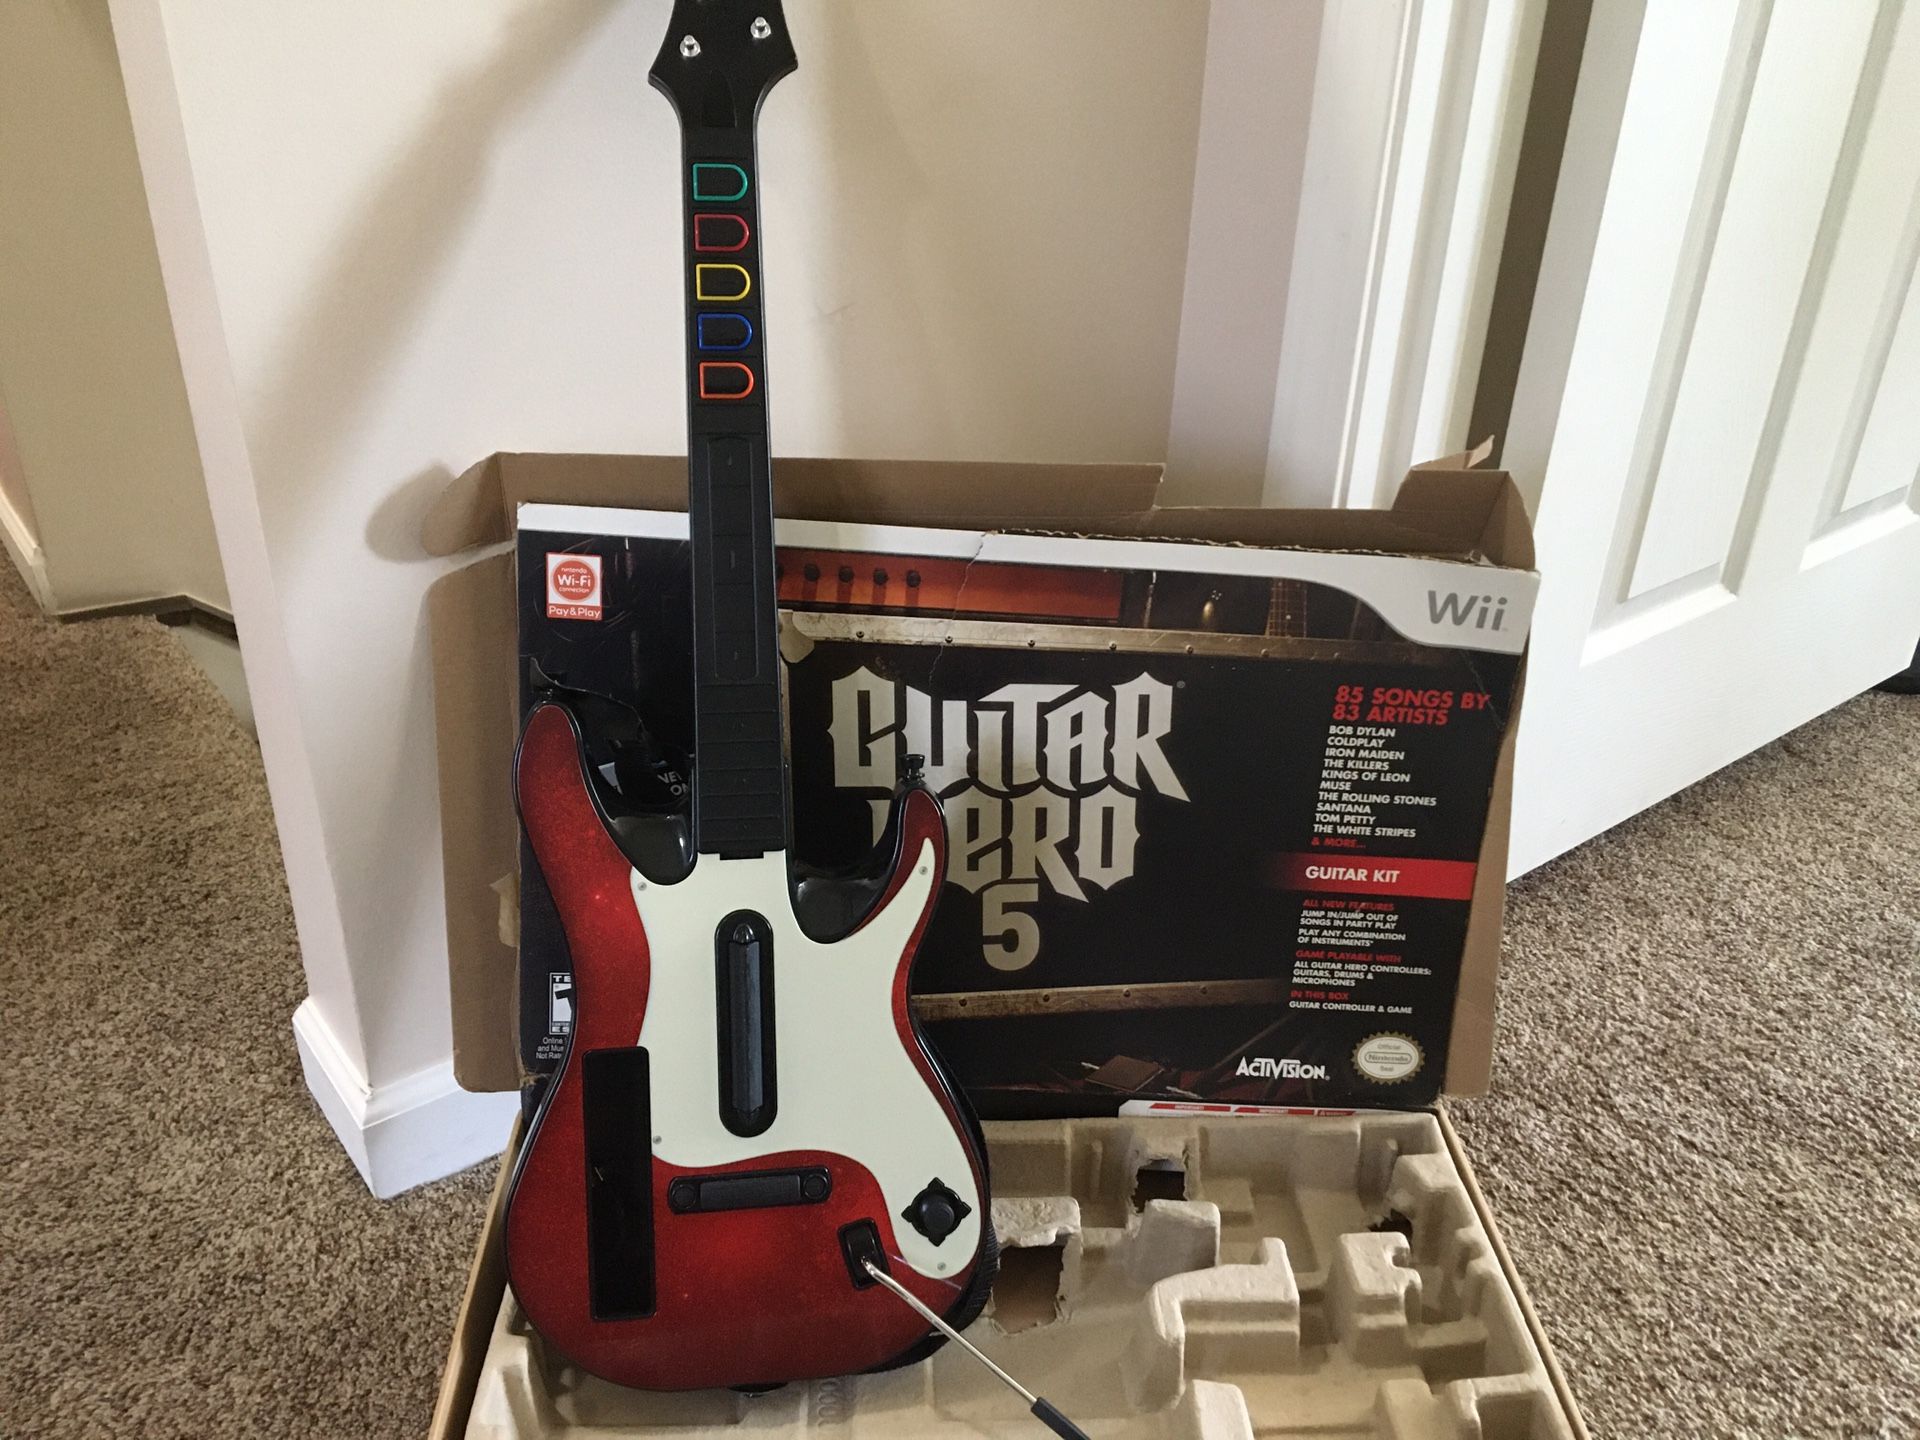 Wii Guitar Hero 5 Guitar AND Game